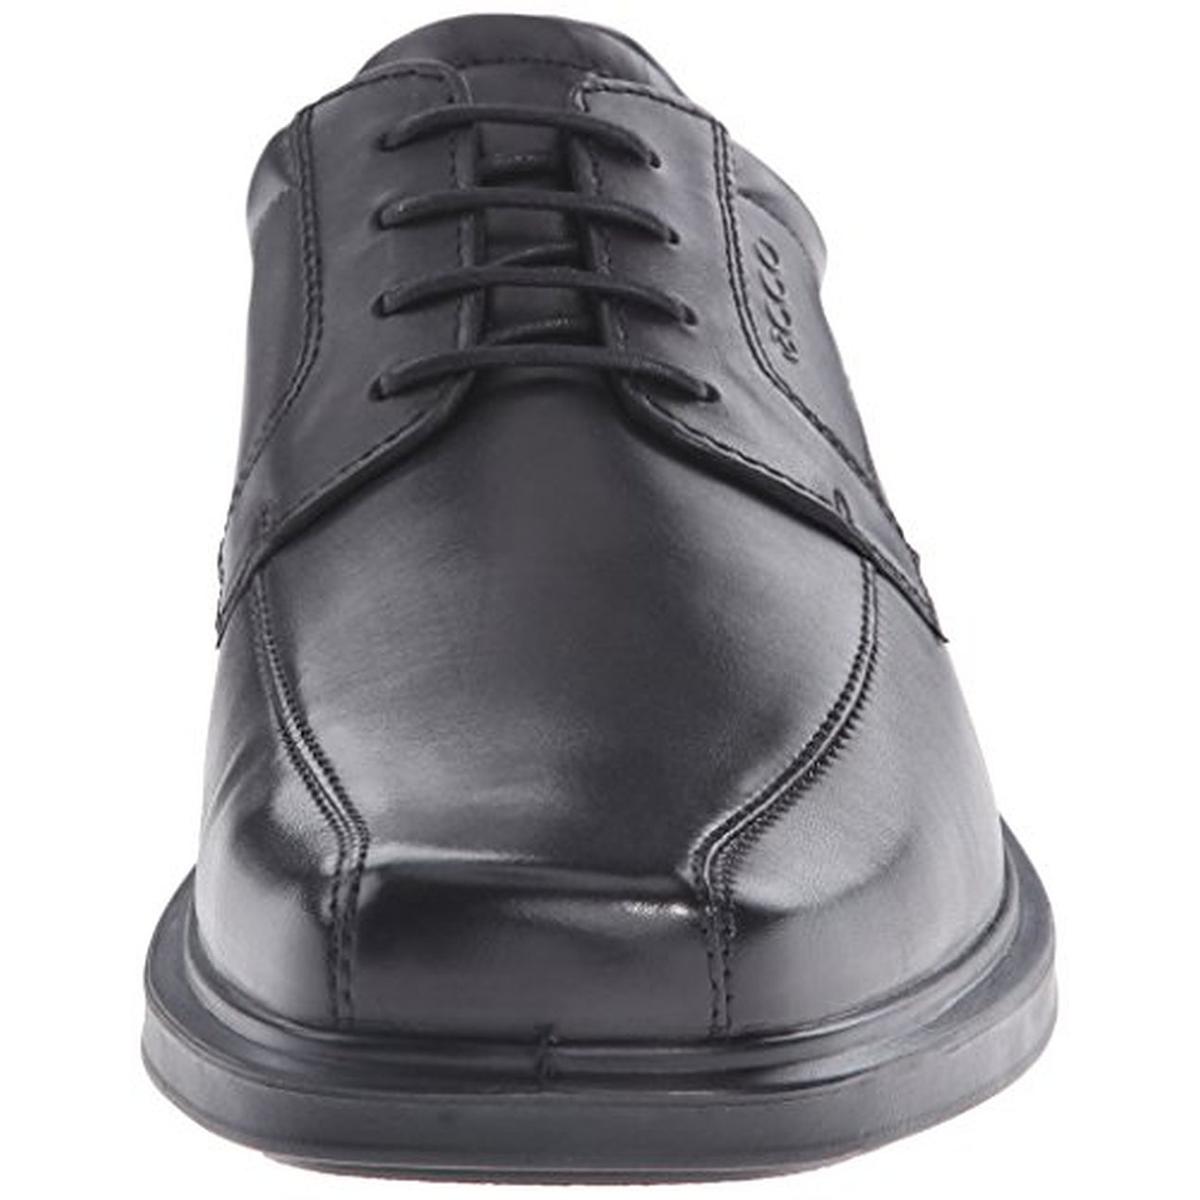 ECCO Mens Helsinki Black Leather Square Toe Oxfords Shoes 45 BHFO 0937 ...